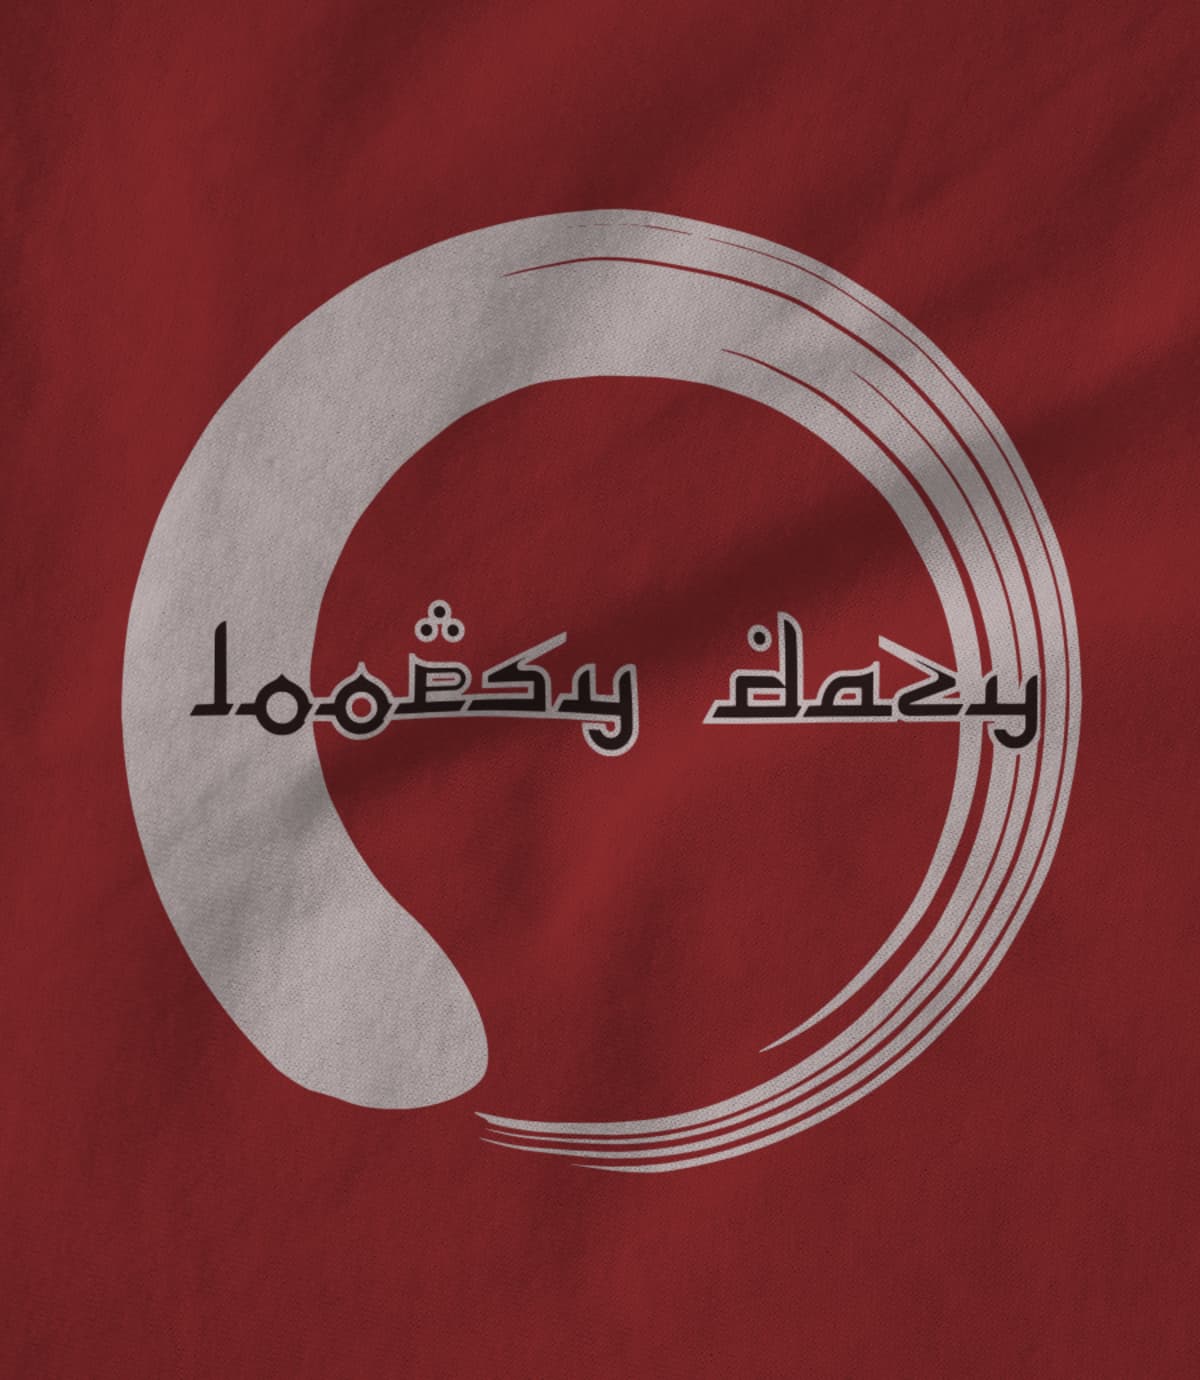 Loopsy Dazy